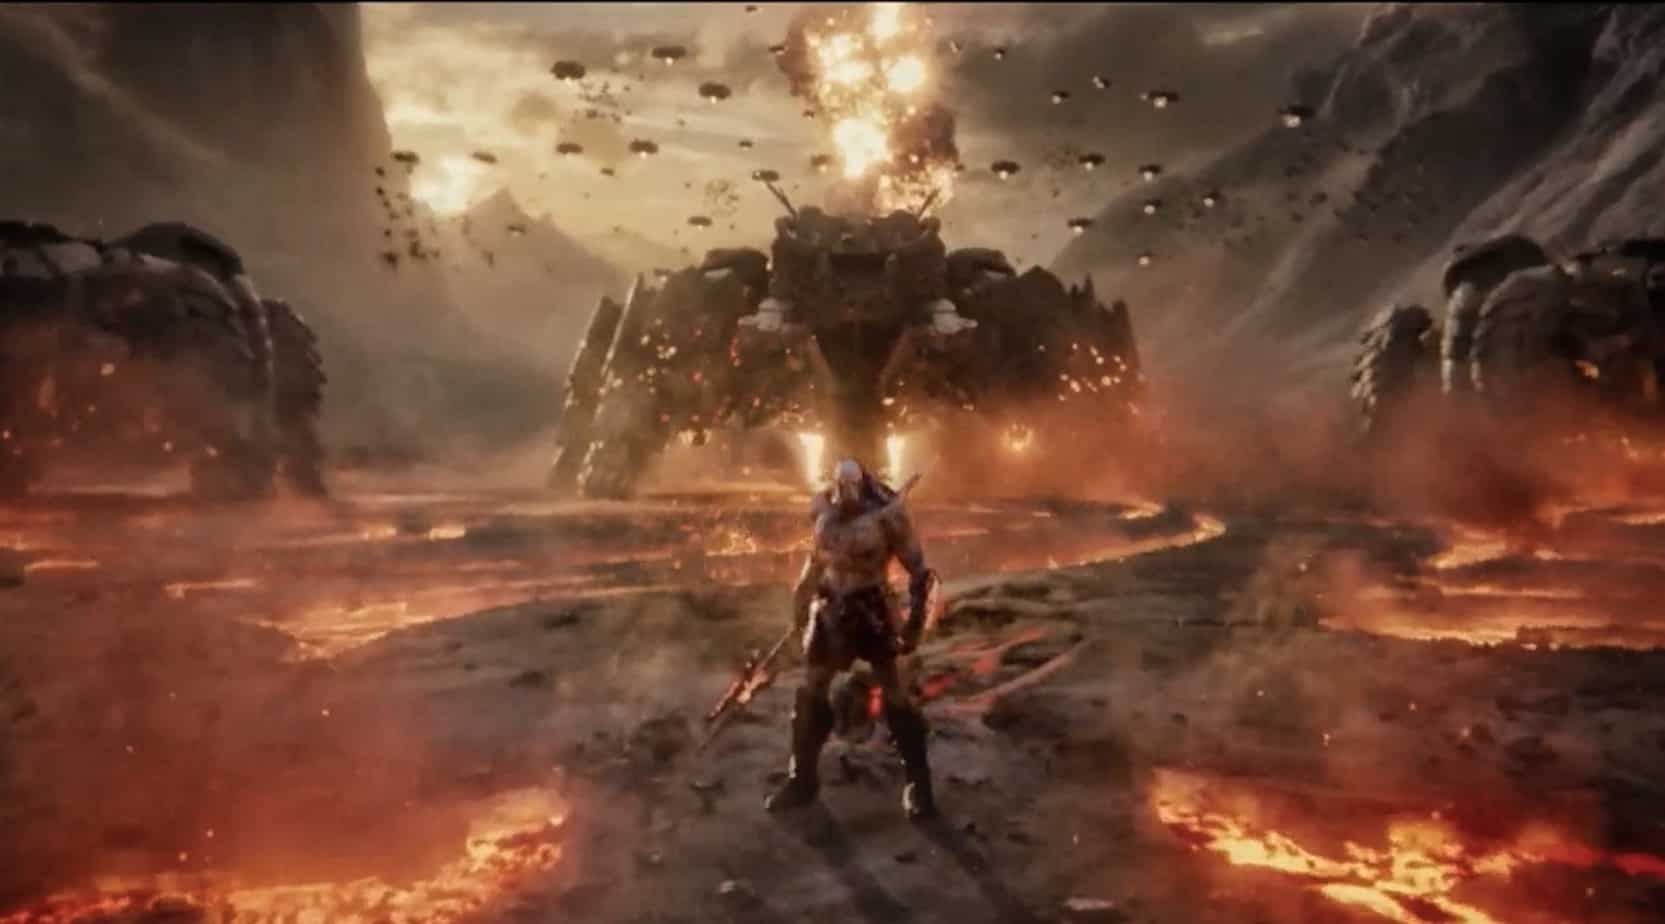 Justice League Snyder Cut teaser trailer Darkseid